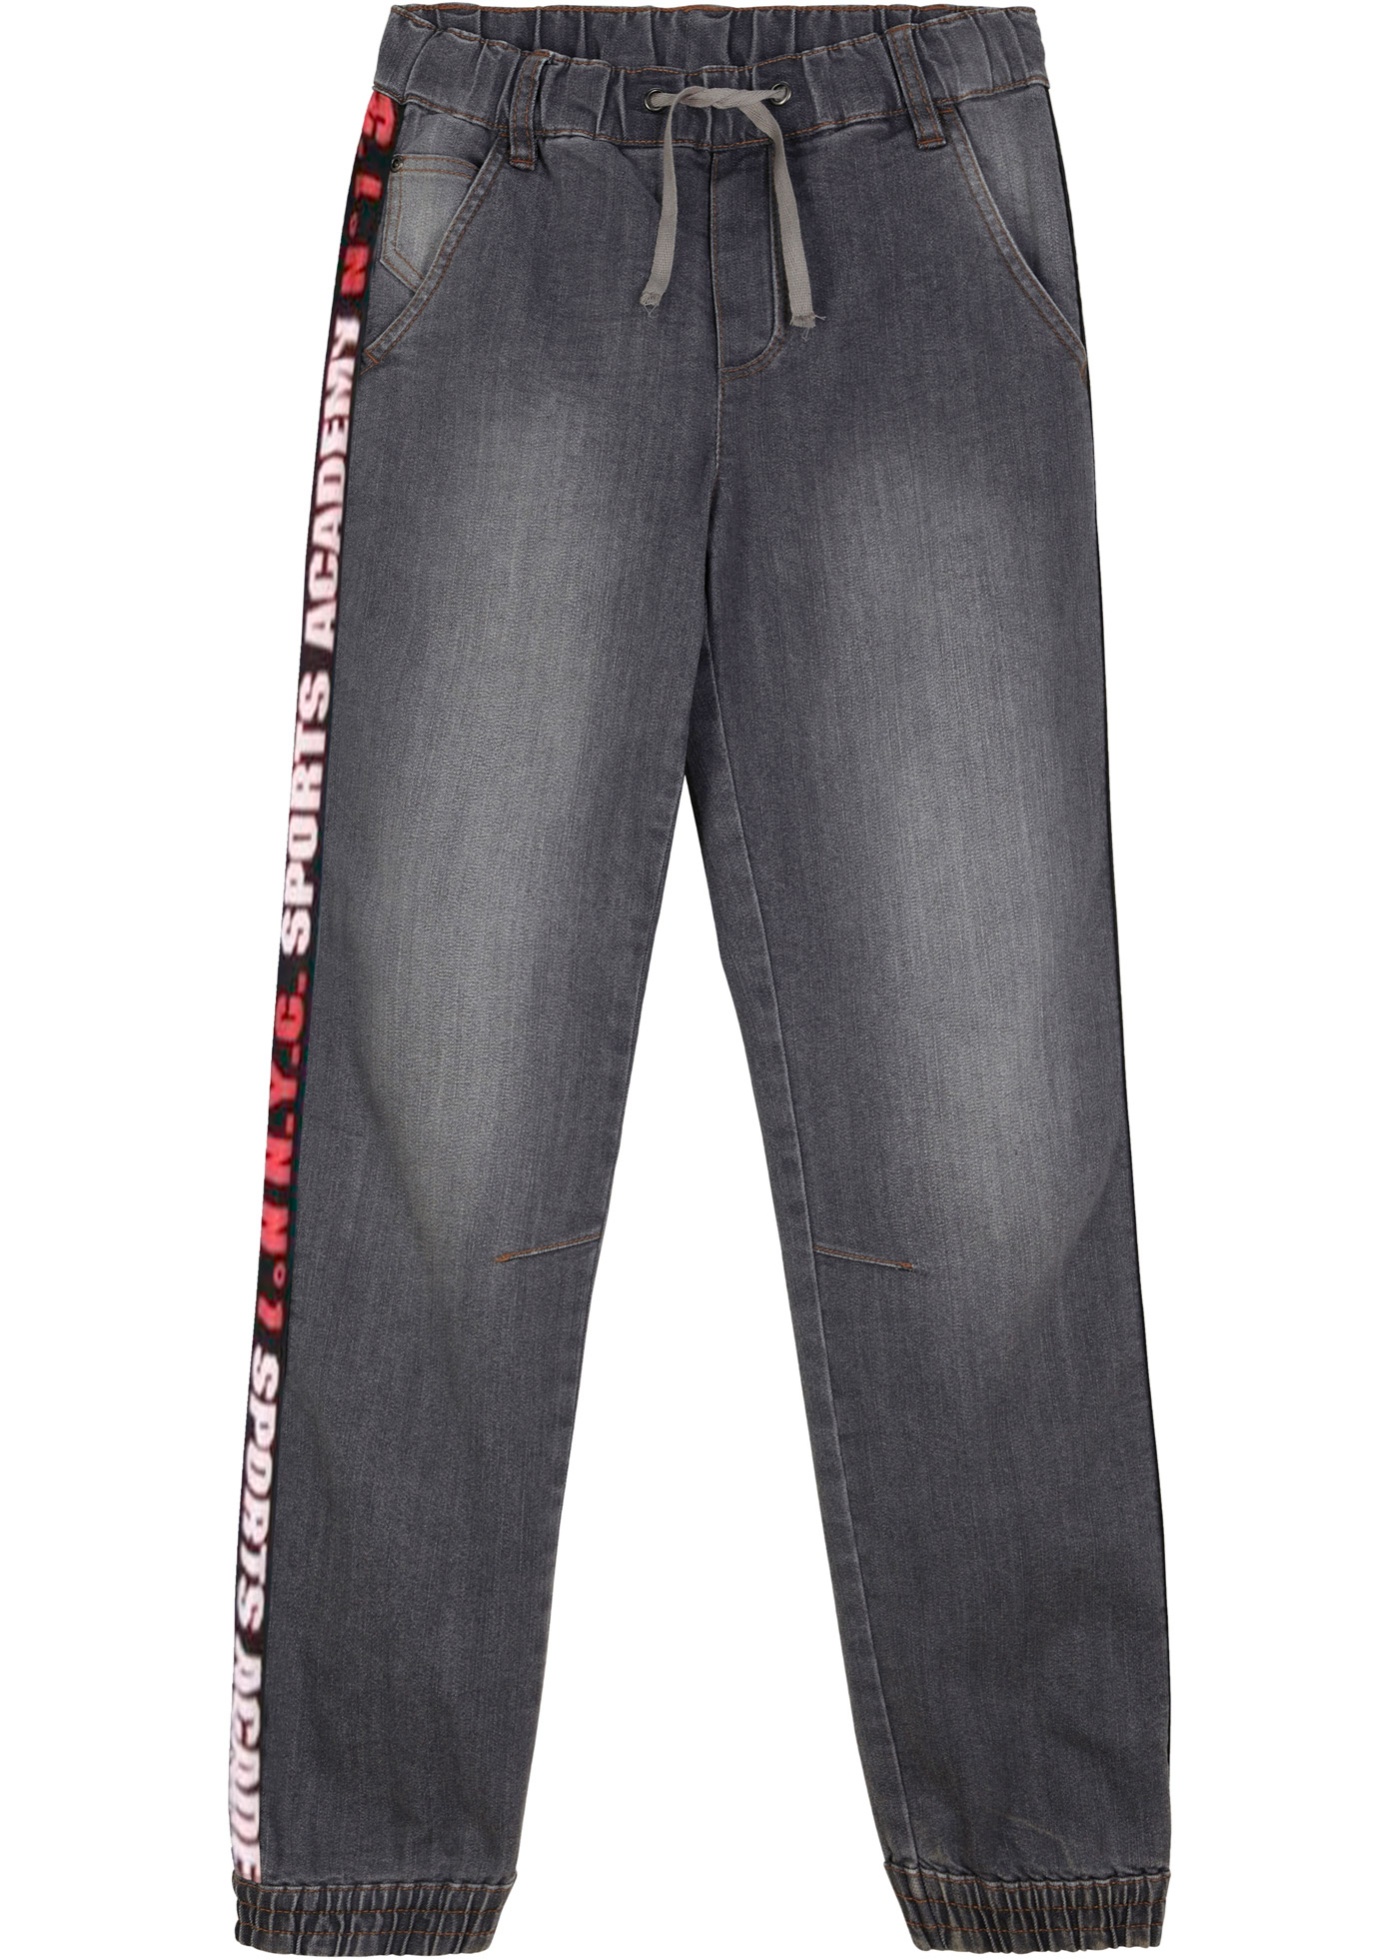 Jeans in felpa con bande, slim fit (Grigio) - John Baner JEANSWEAR